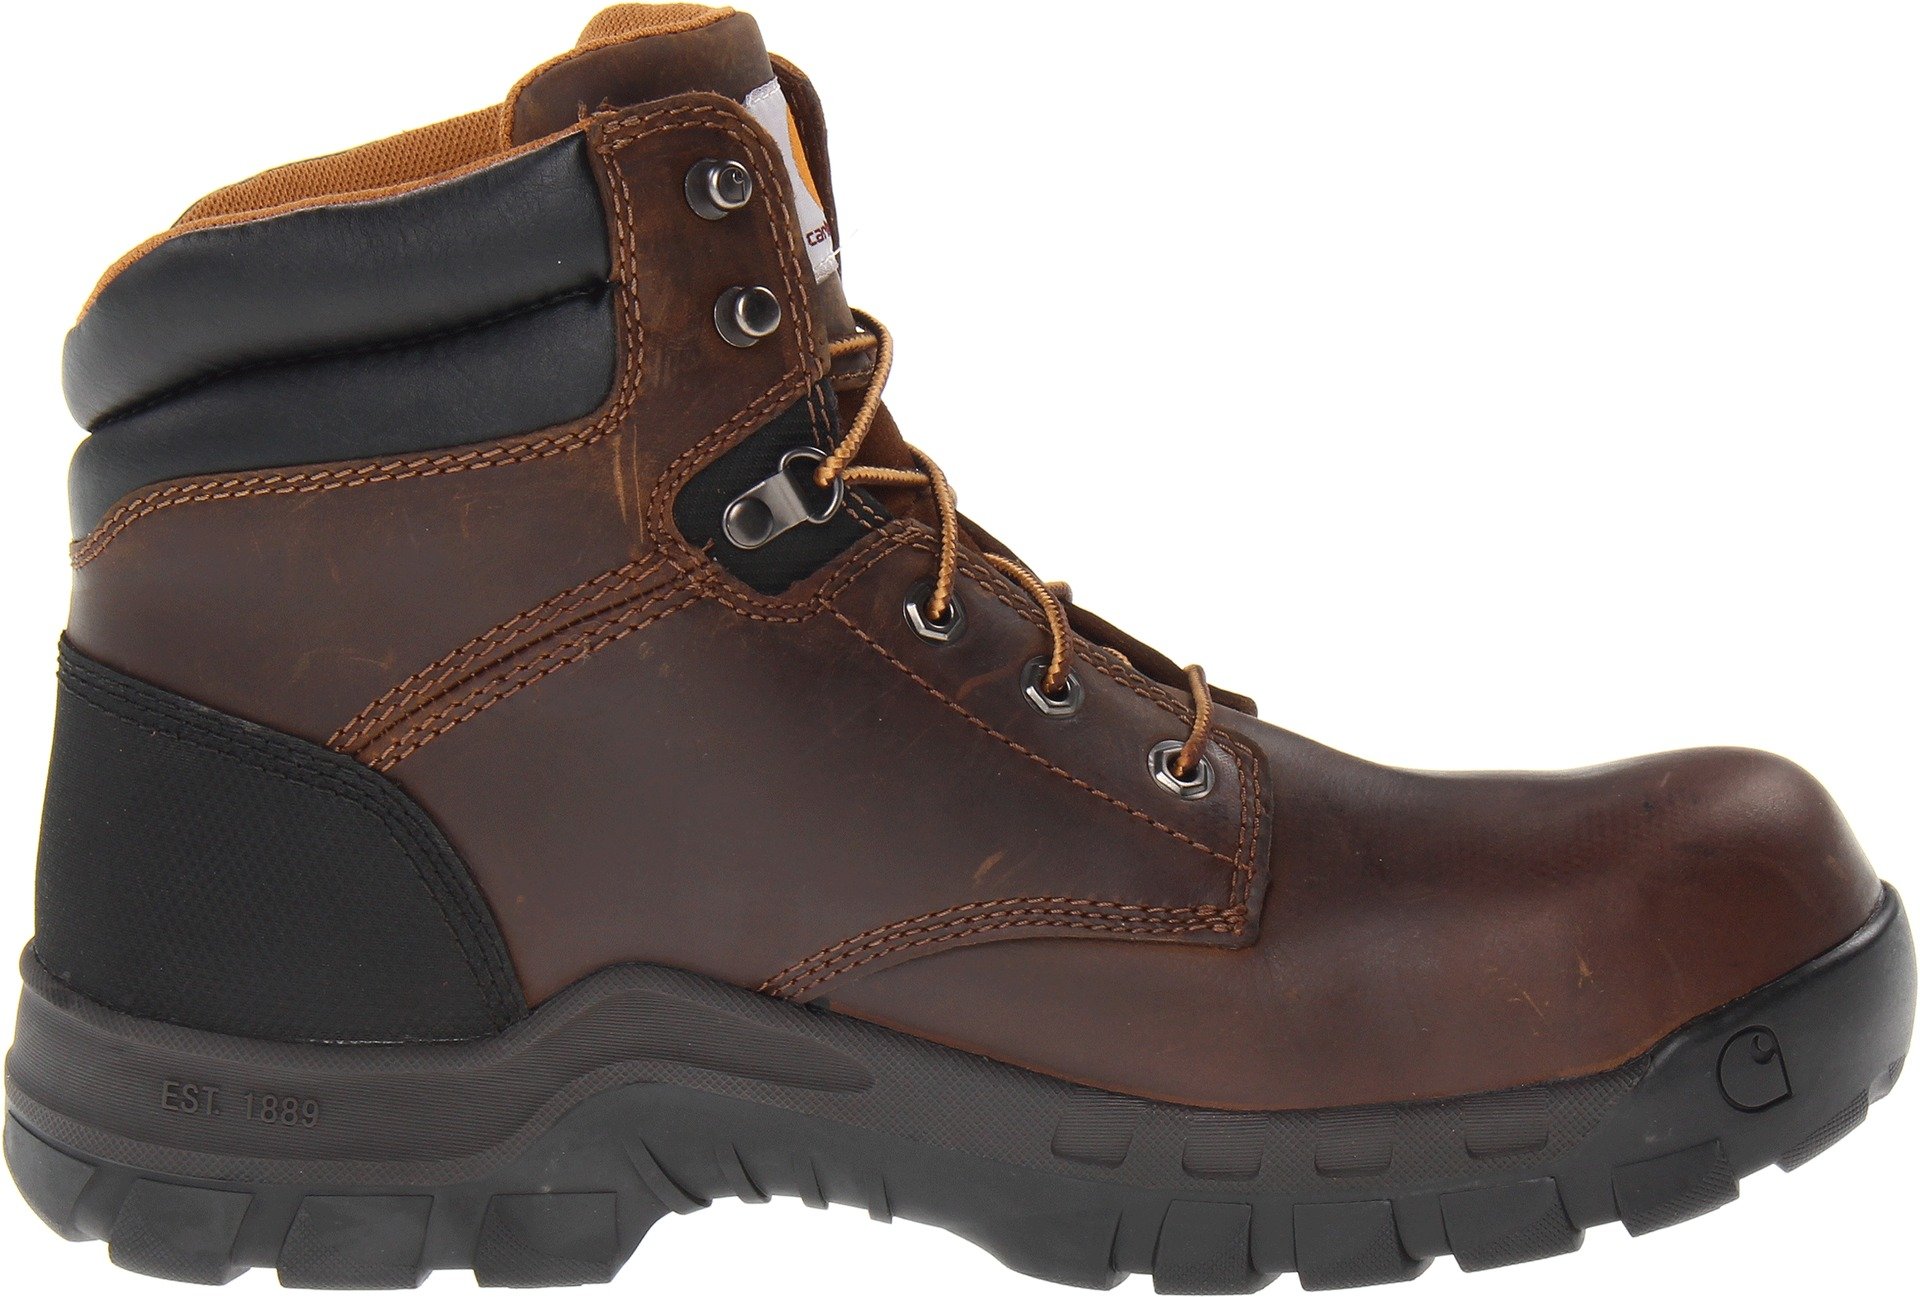 Carhartt Men's CMF6366 6 Inch Composite Toe Boot